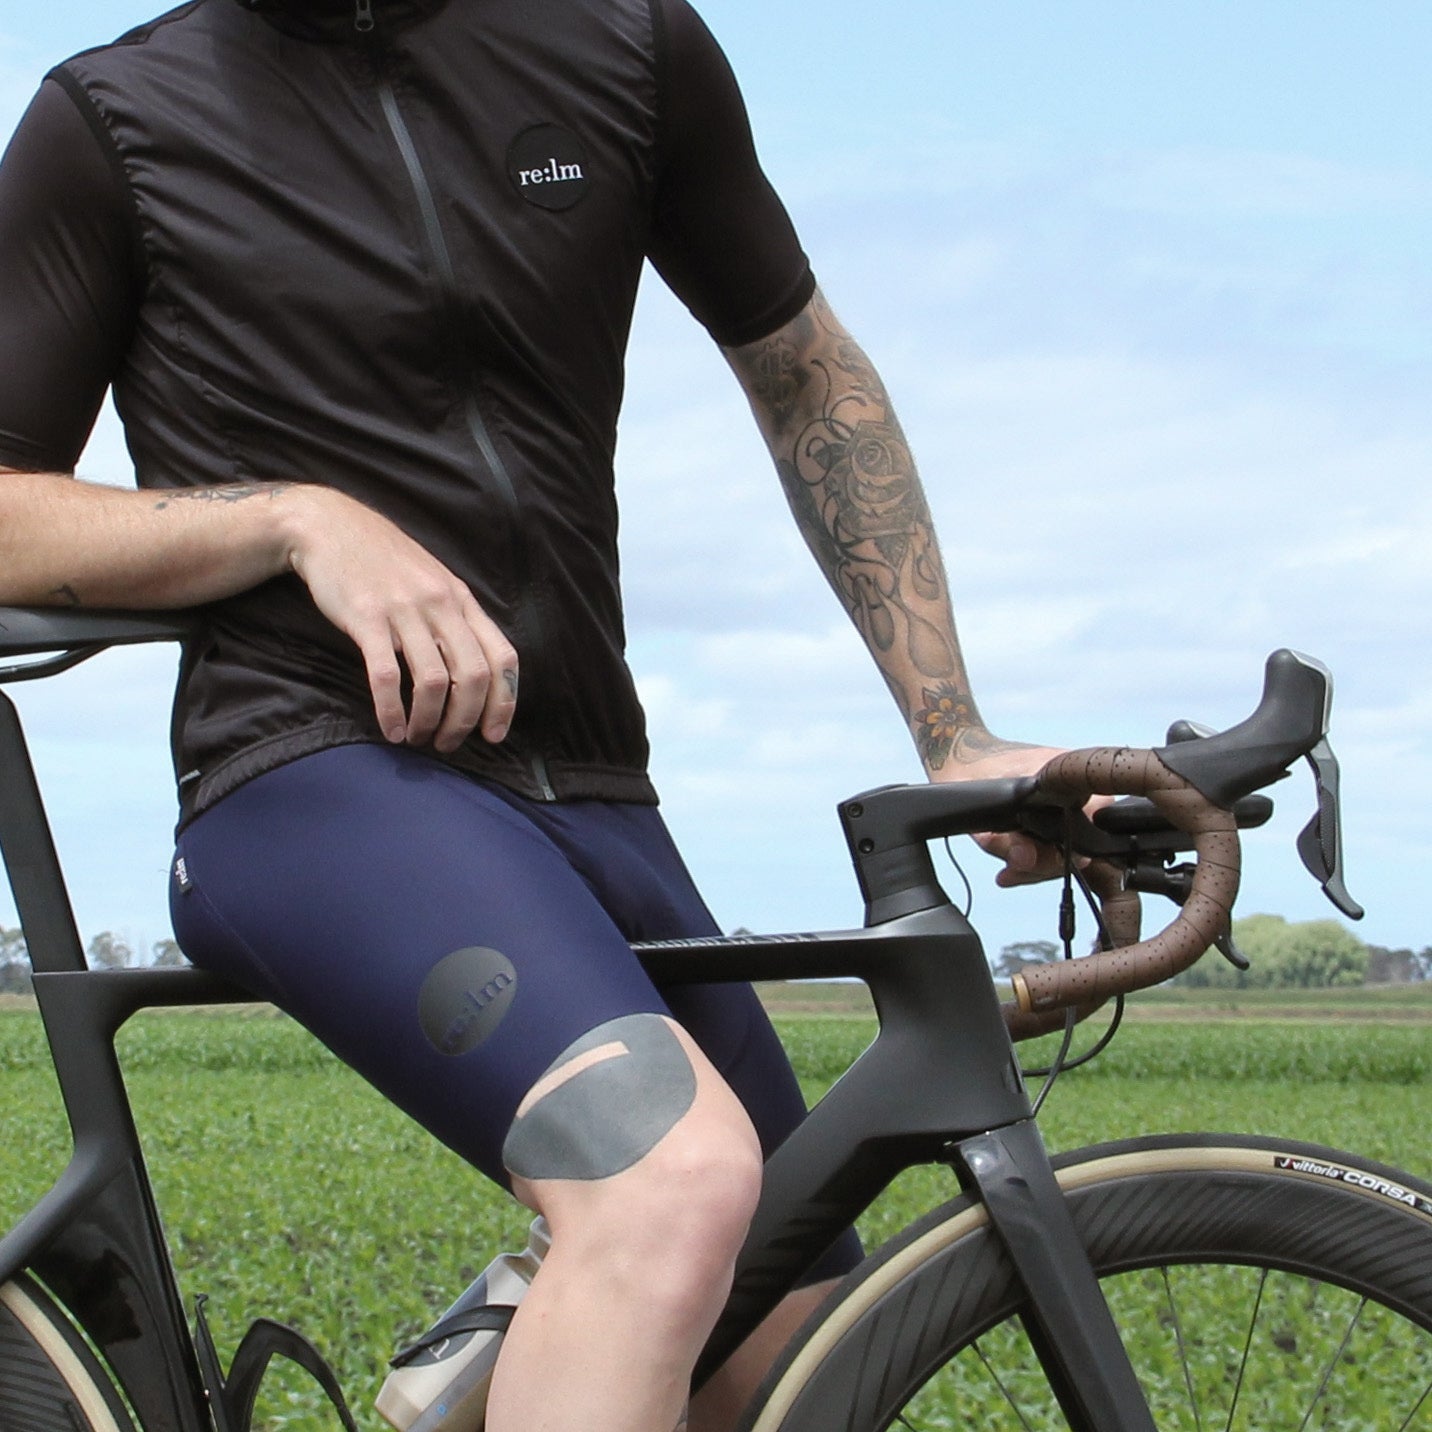 Man on bike wearing Relm Cycling black gilet and navy bib shorts